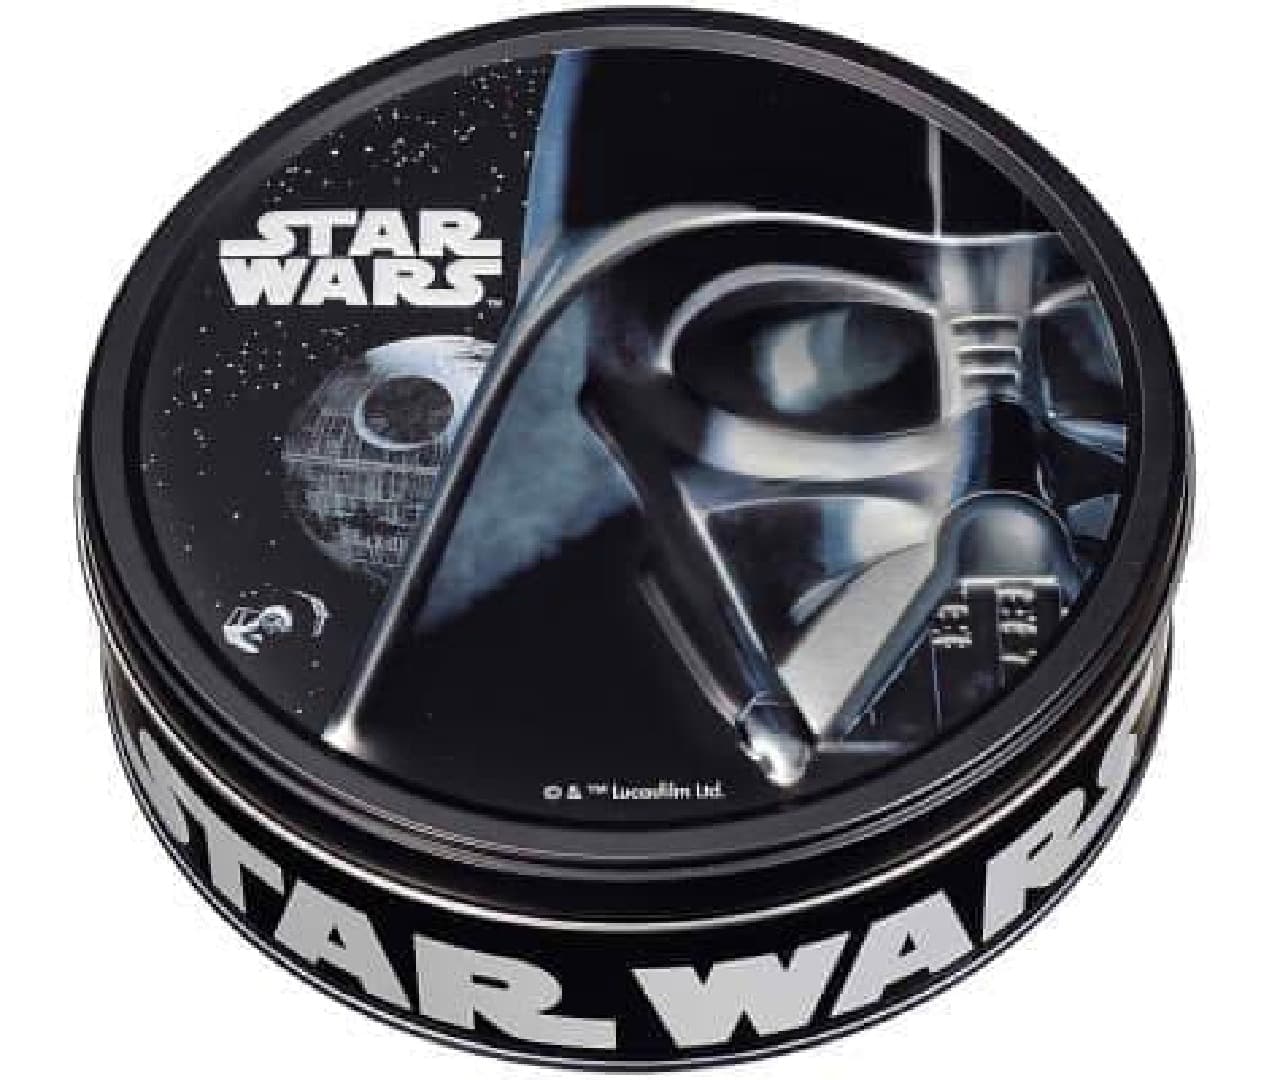 Star Wars cocoa cookie tin